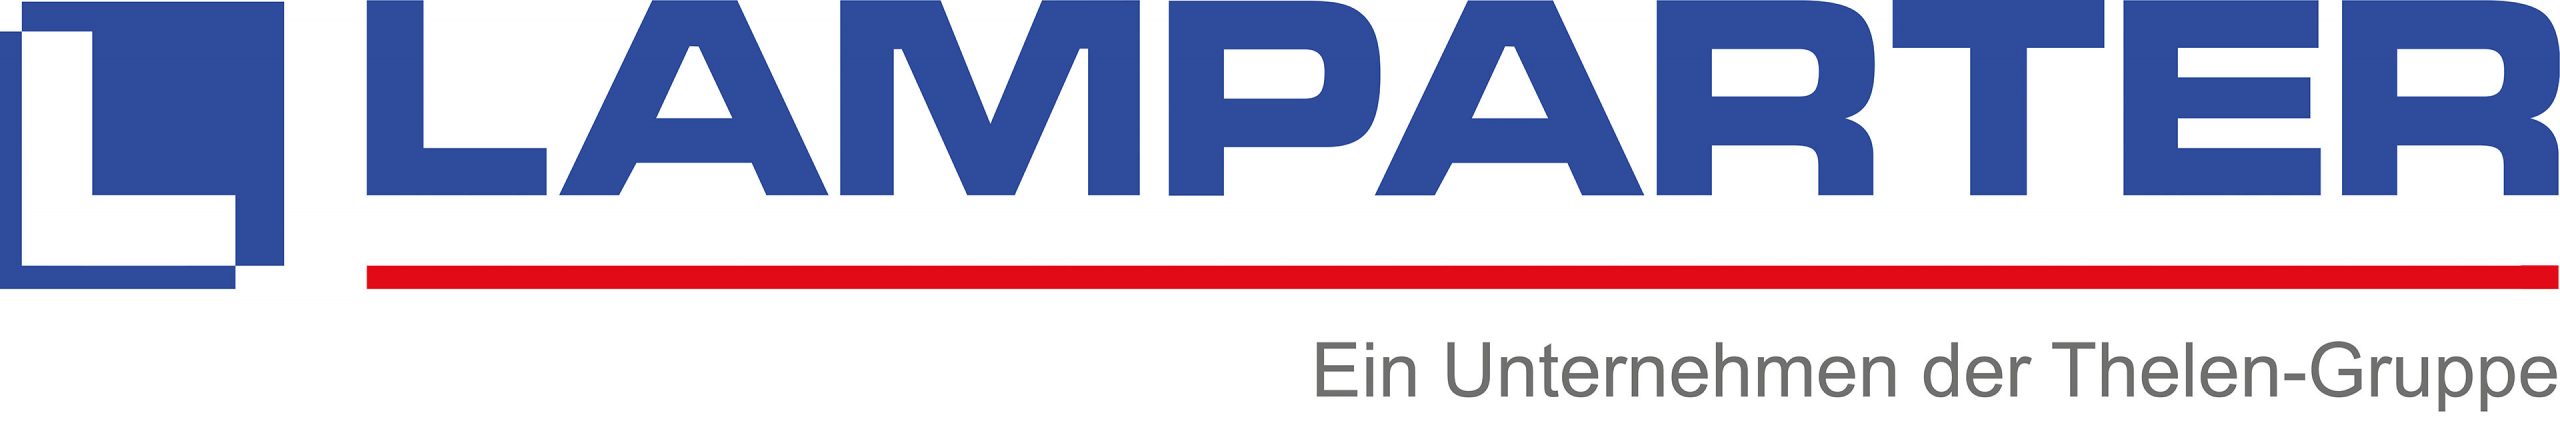 Lamparter Logo 2020 UHD